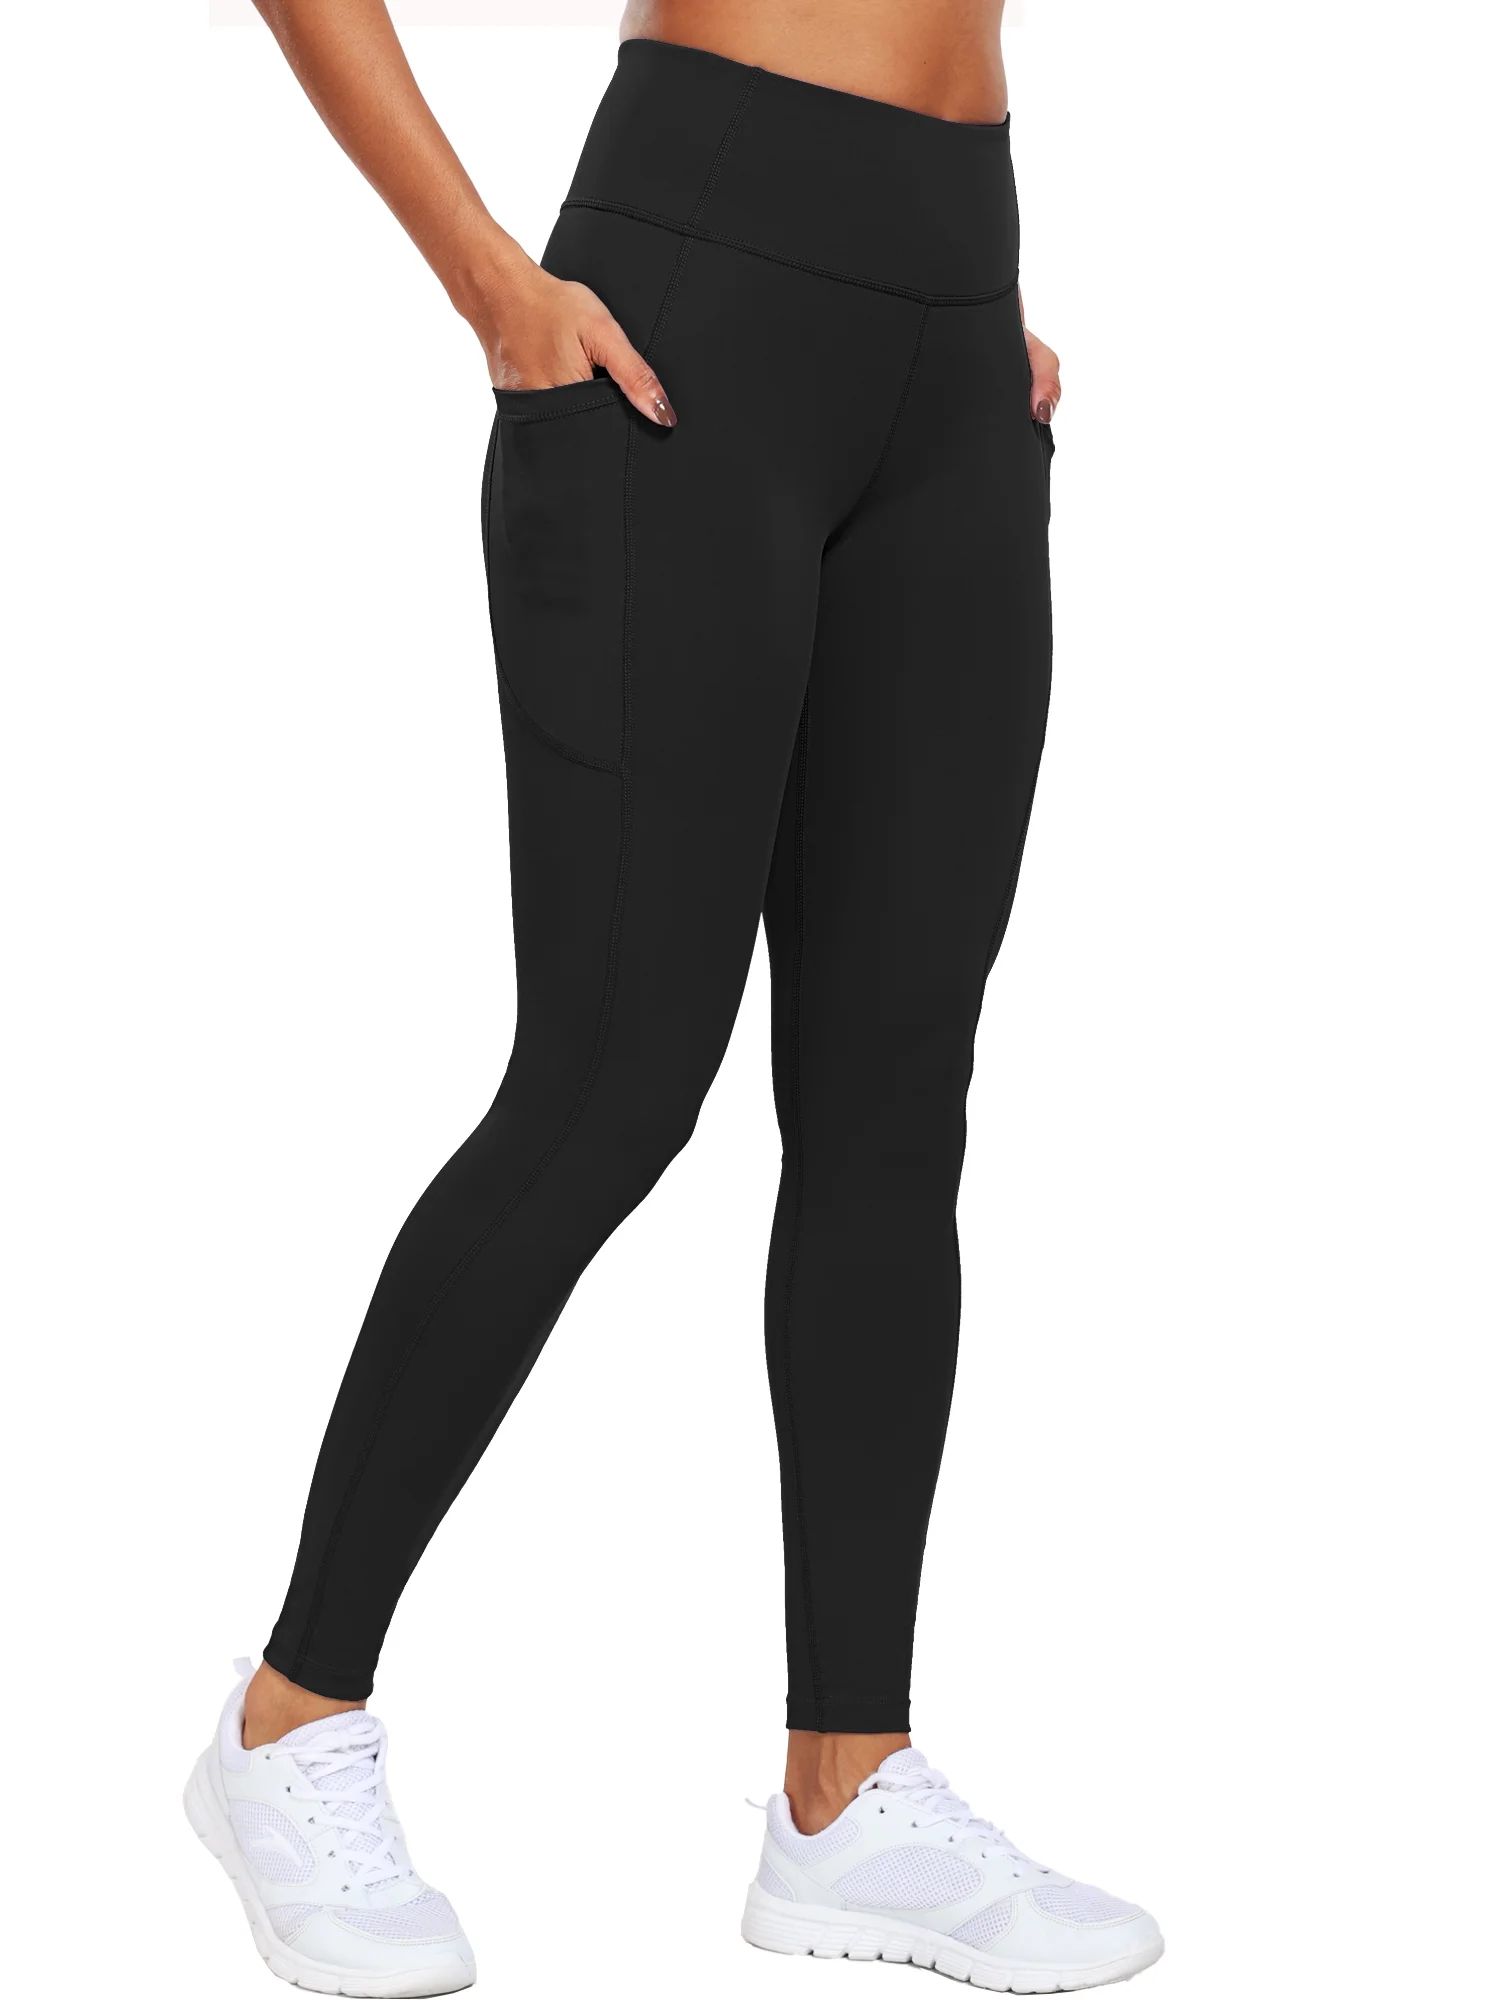 NELEUS Womens High Waist Ankle Yoga Leggings Workout with Two Pockets,Black,US Size L | Walmart (US)